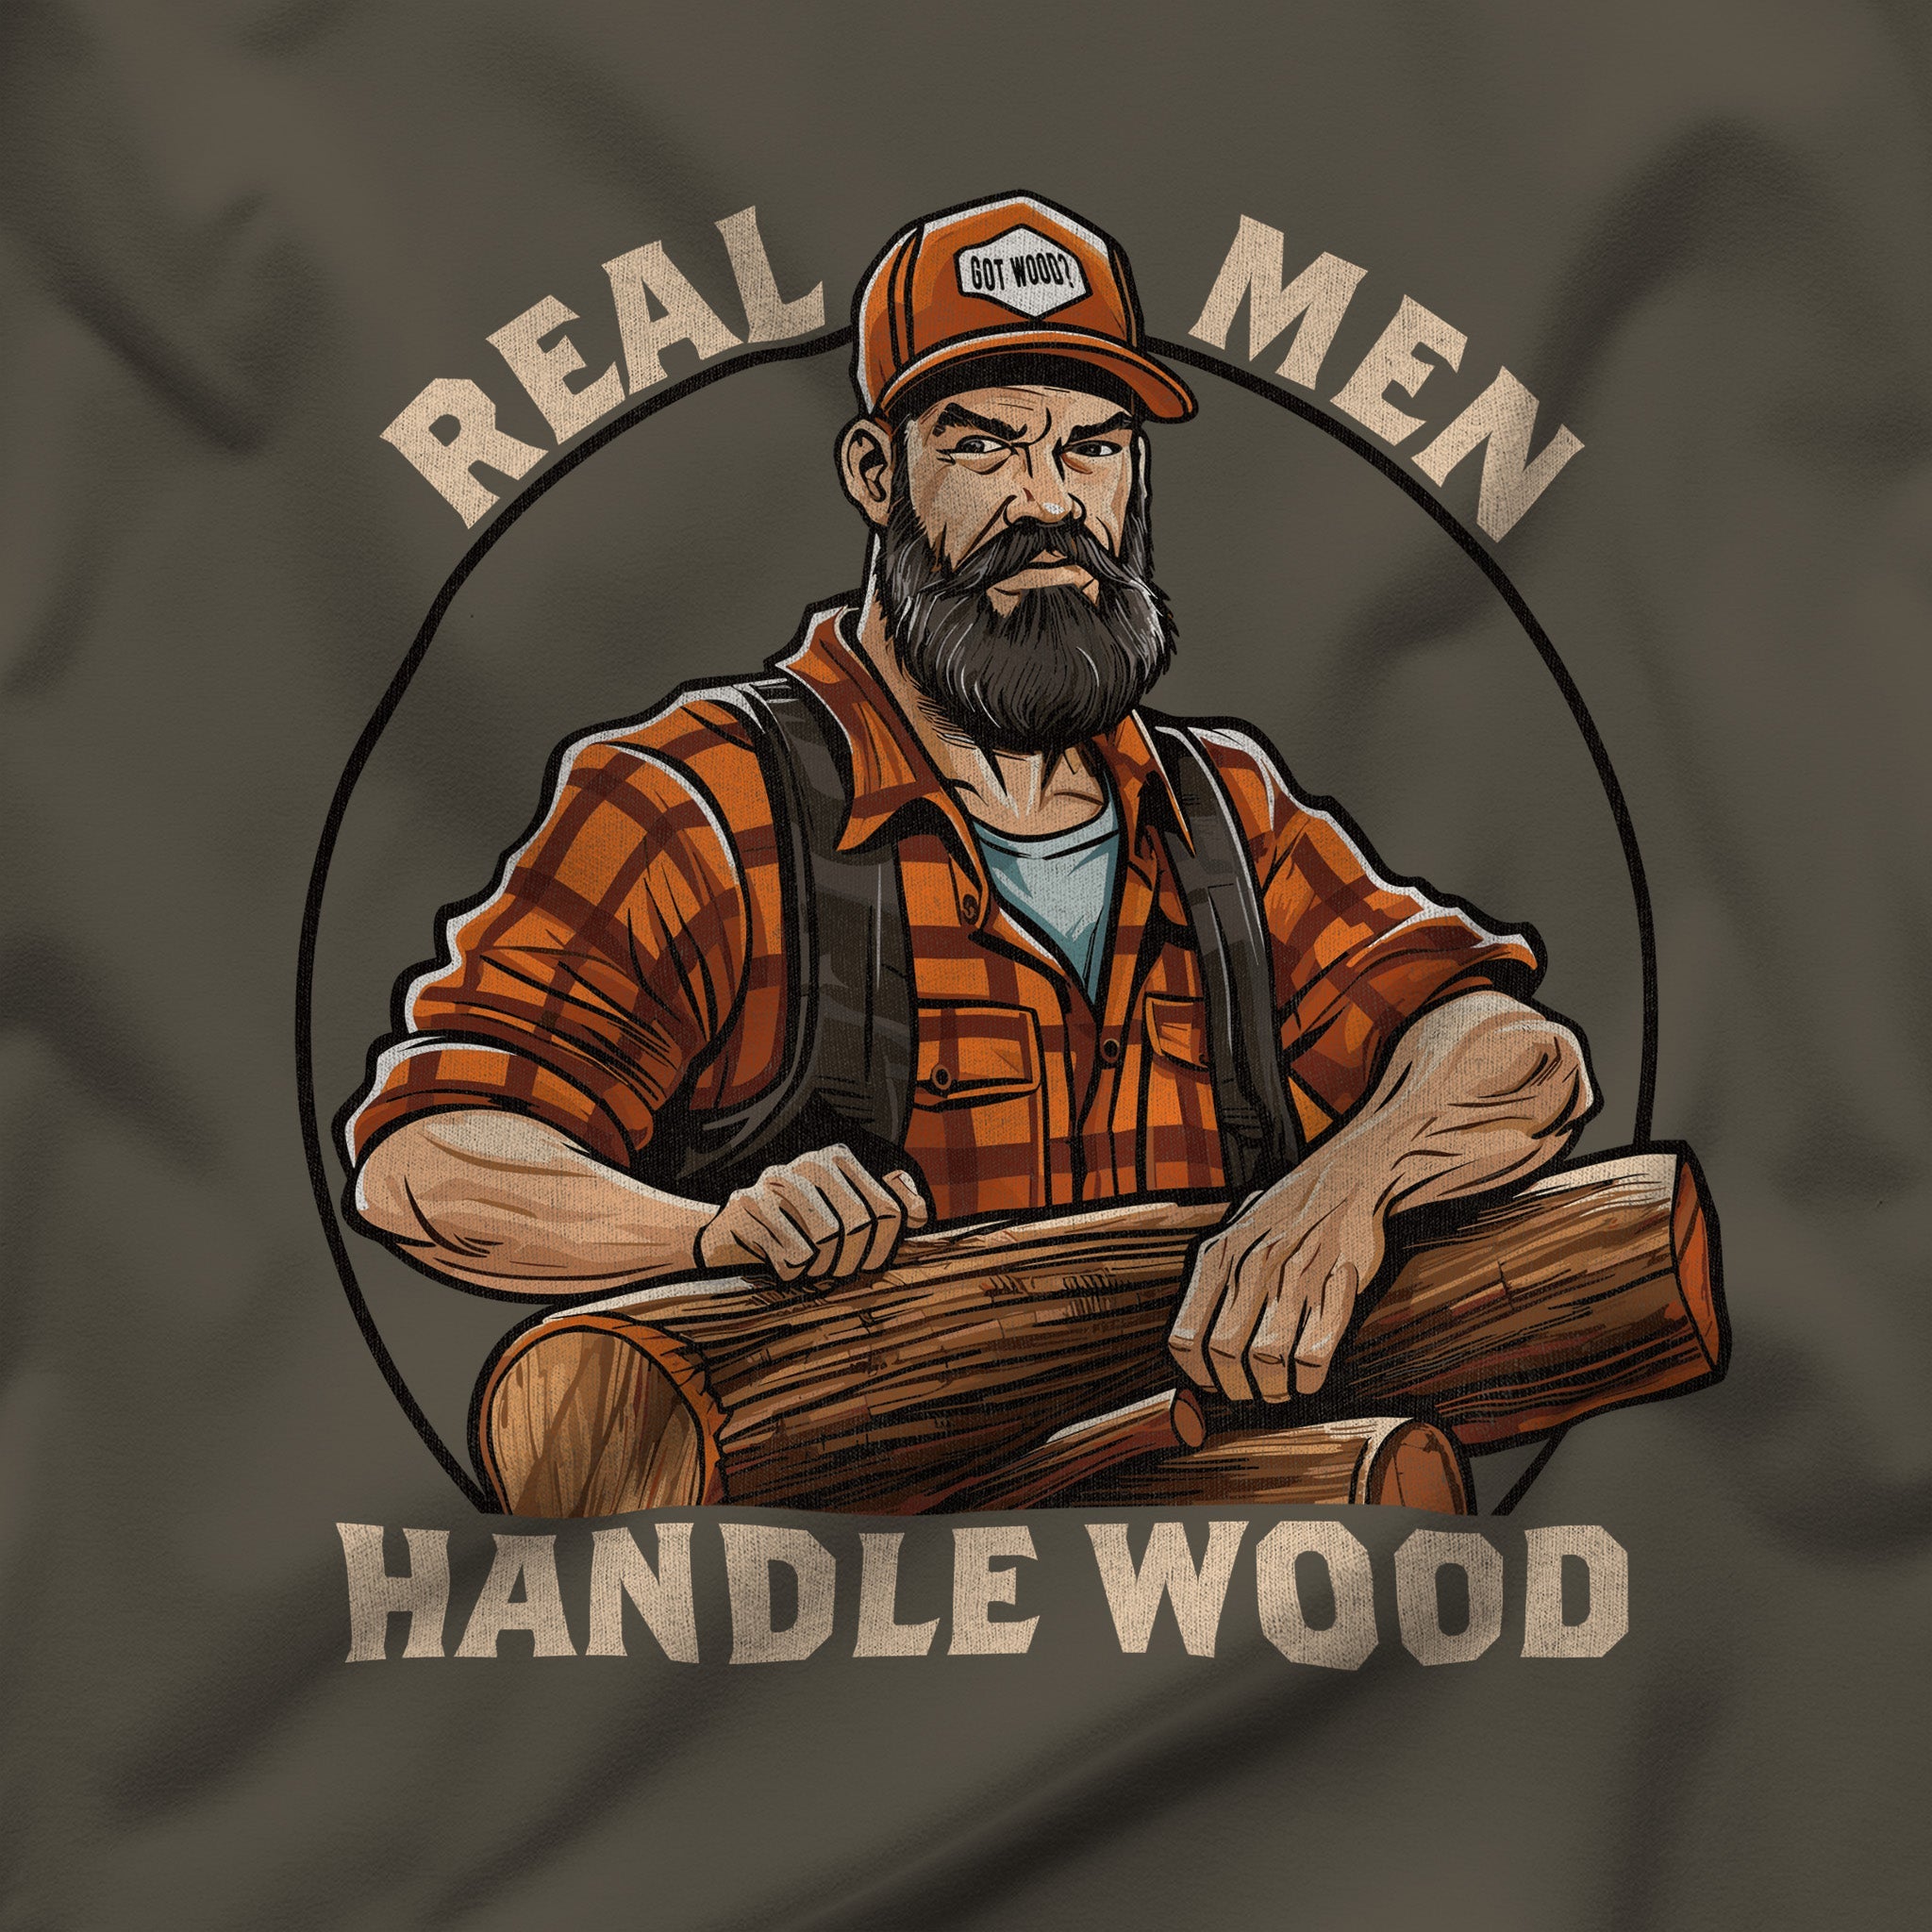 "Real Men Handle Wood" Lumberjack T-Shirt - Hunky Tops#color_army